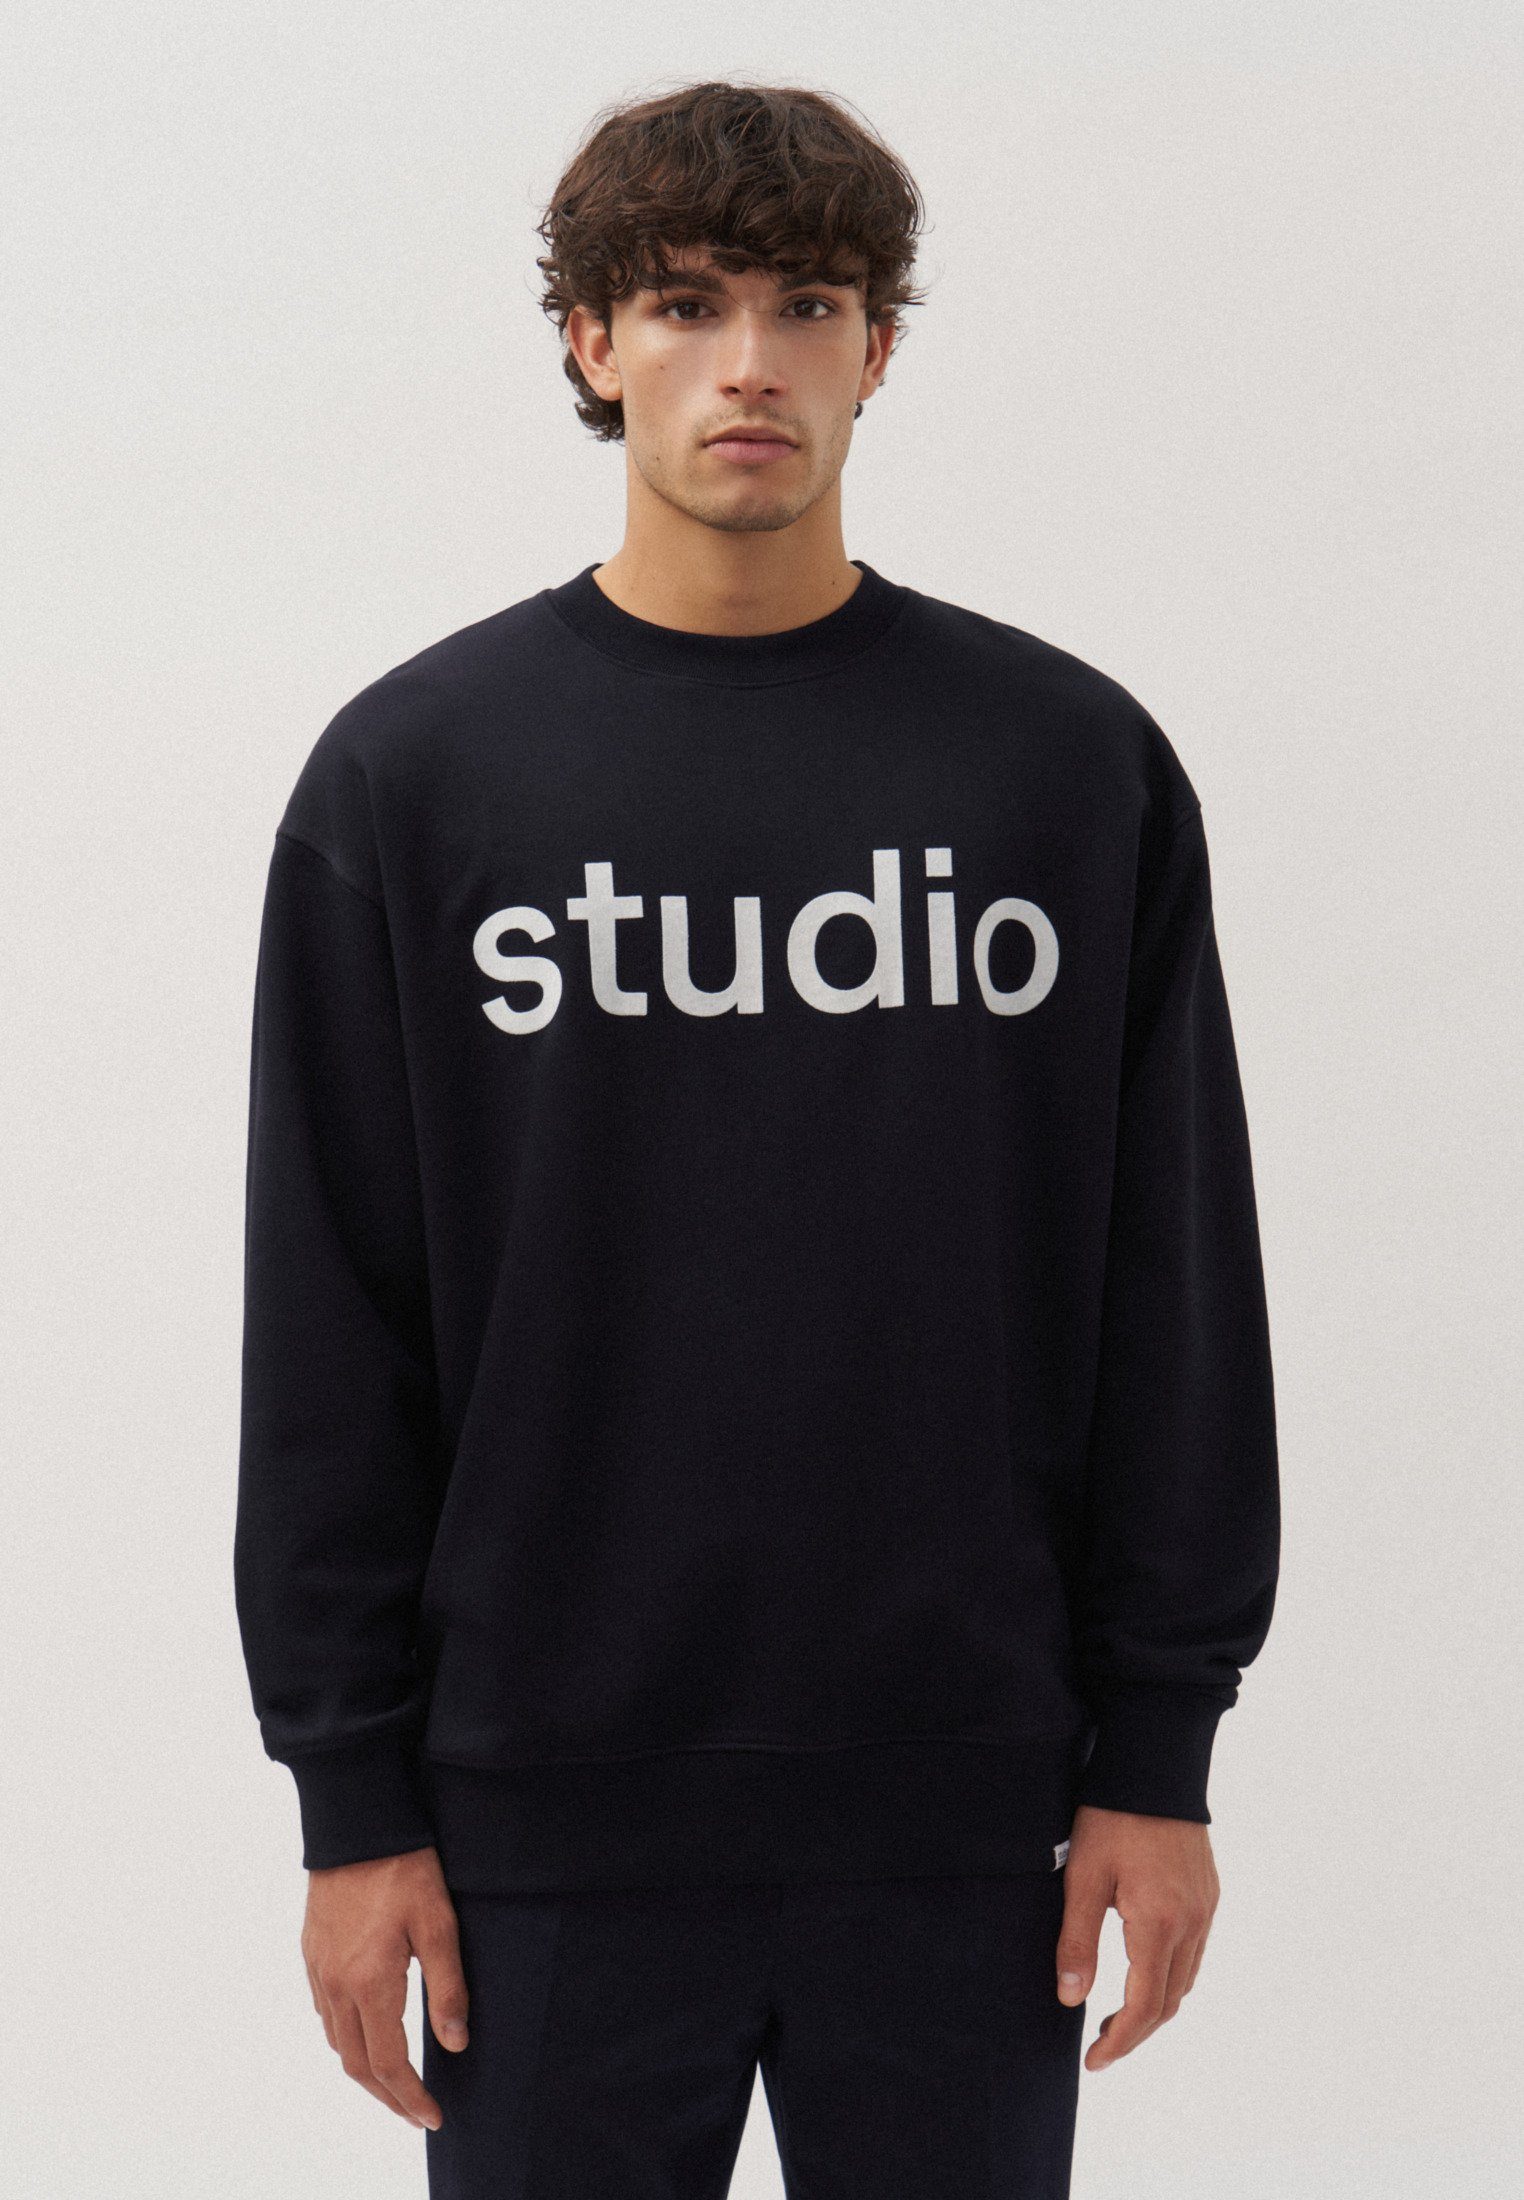 Langarm seidensticker Sweatshirt Studio studio Rundhals Druck